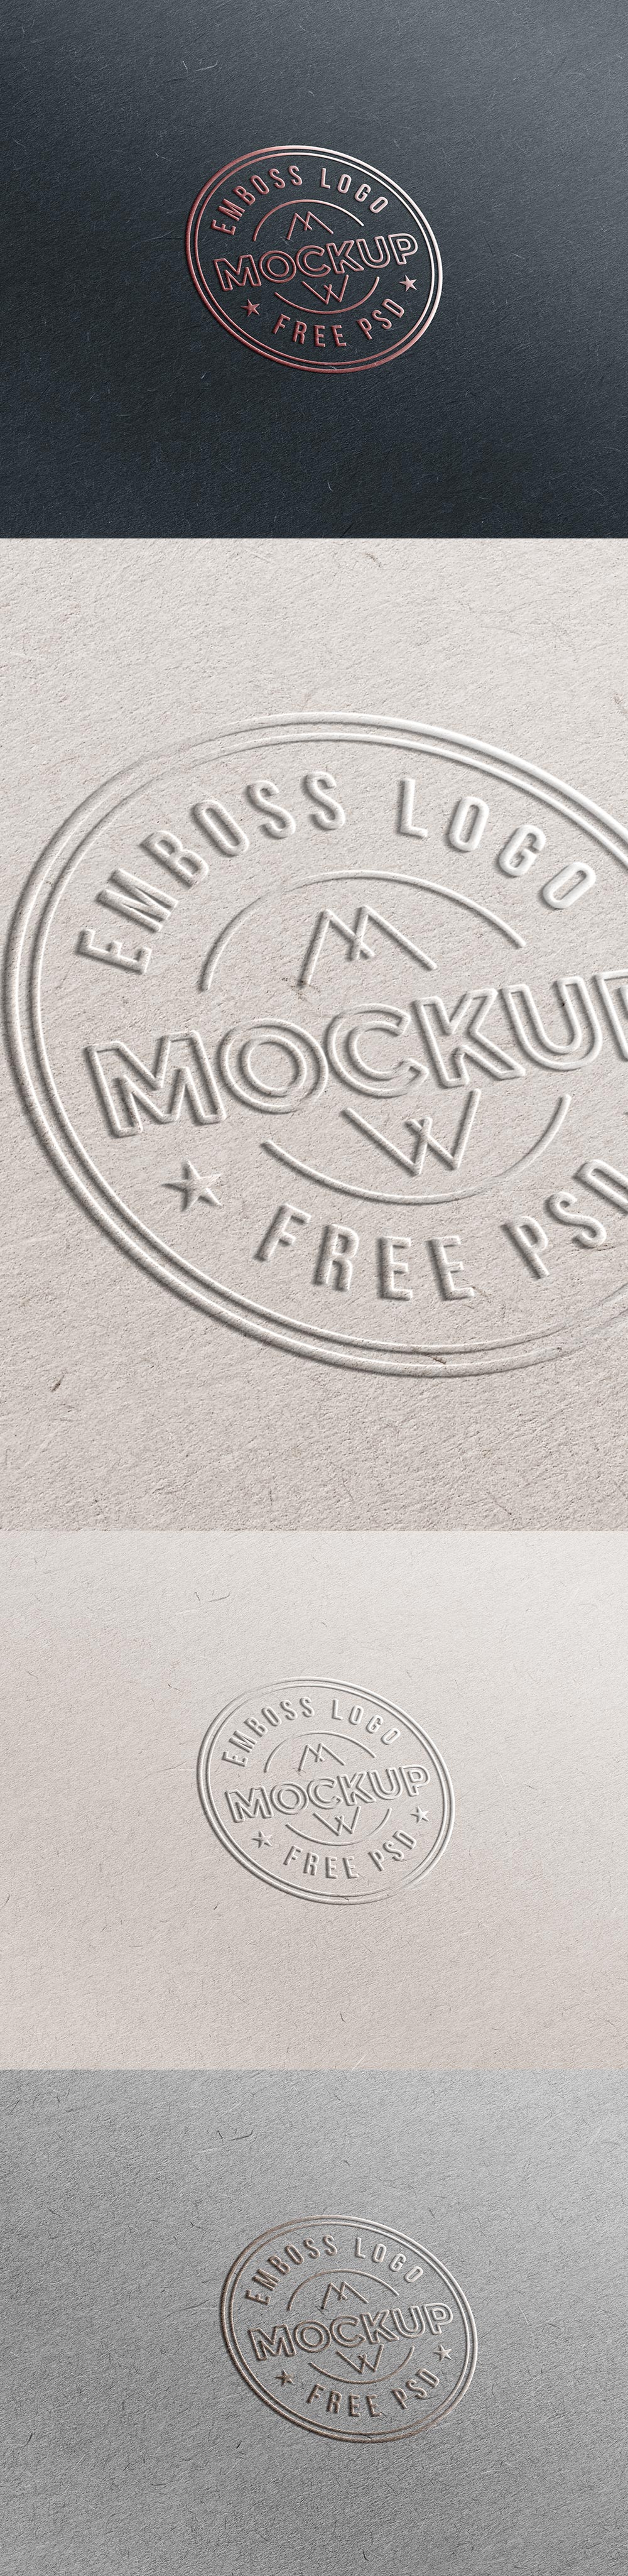 Free Top-Notch Emboss Paper Logo Mockup PSD